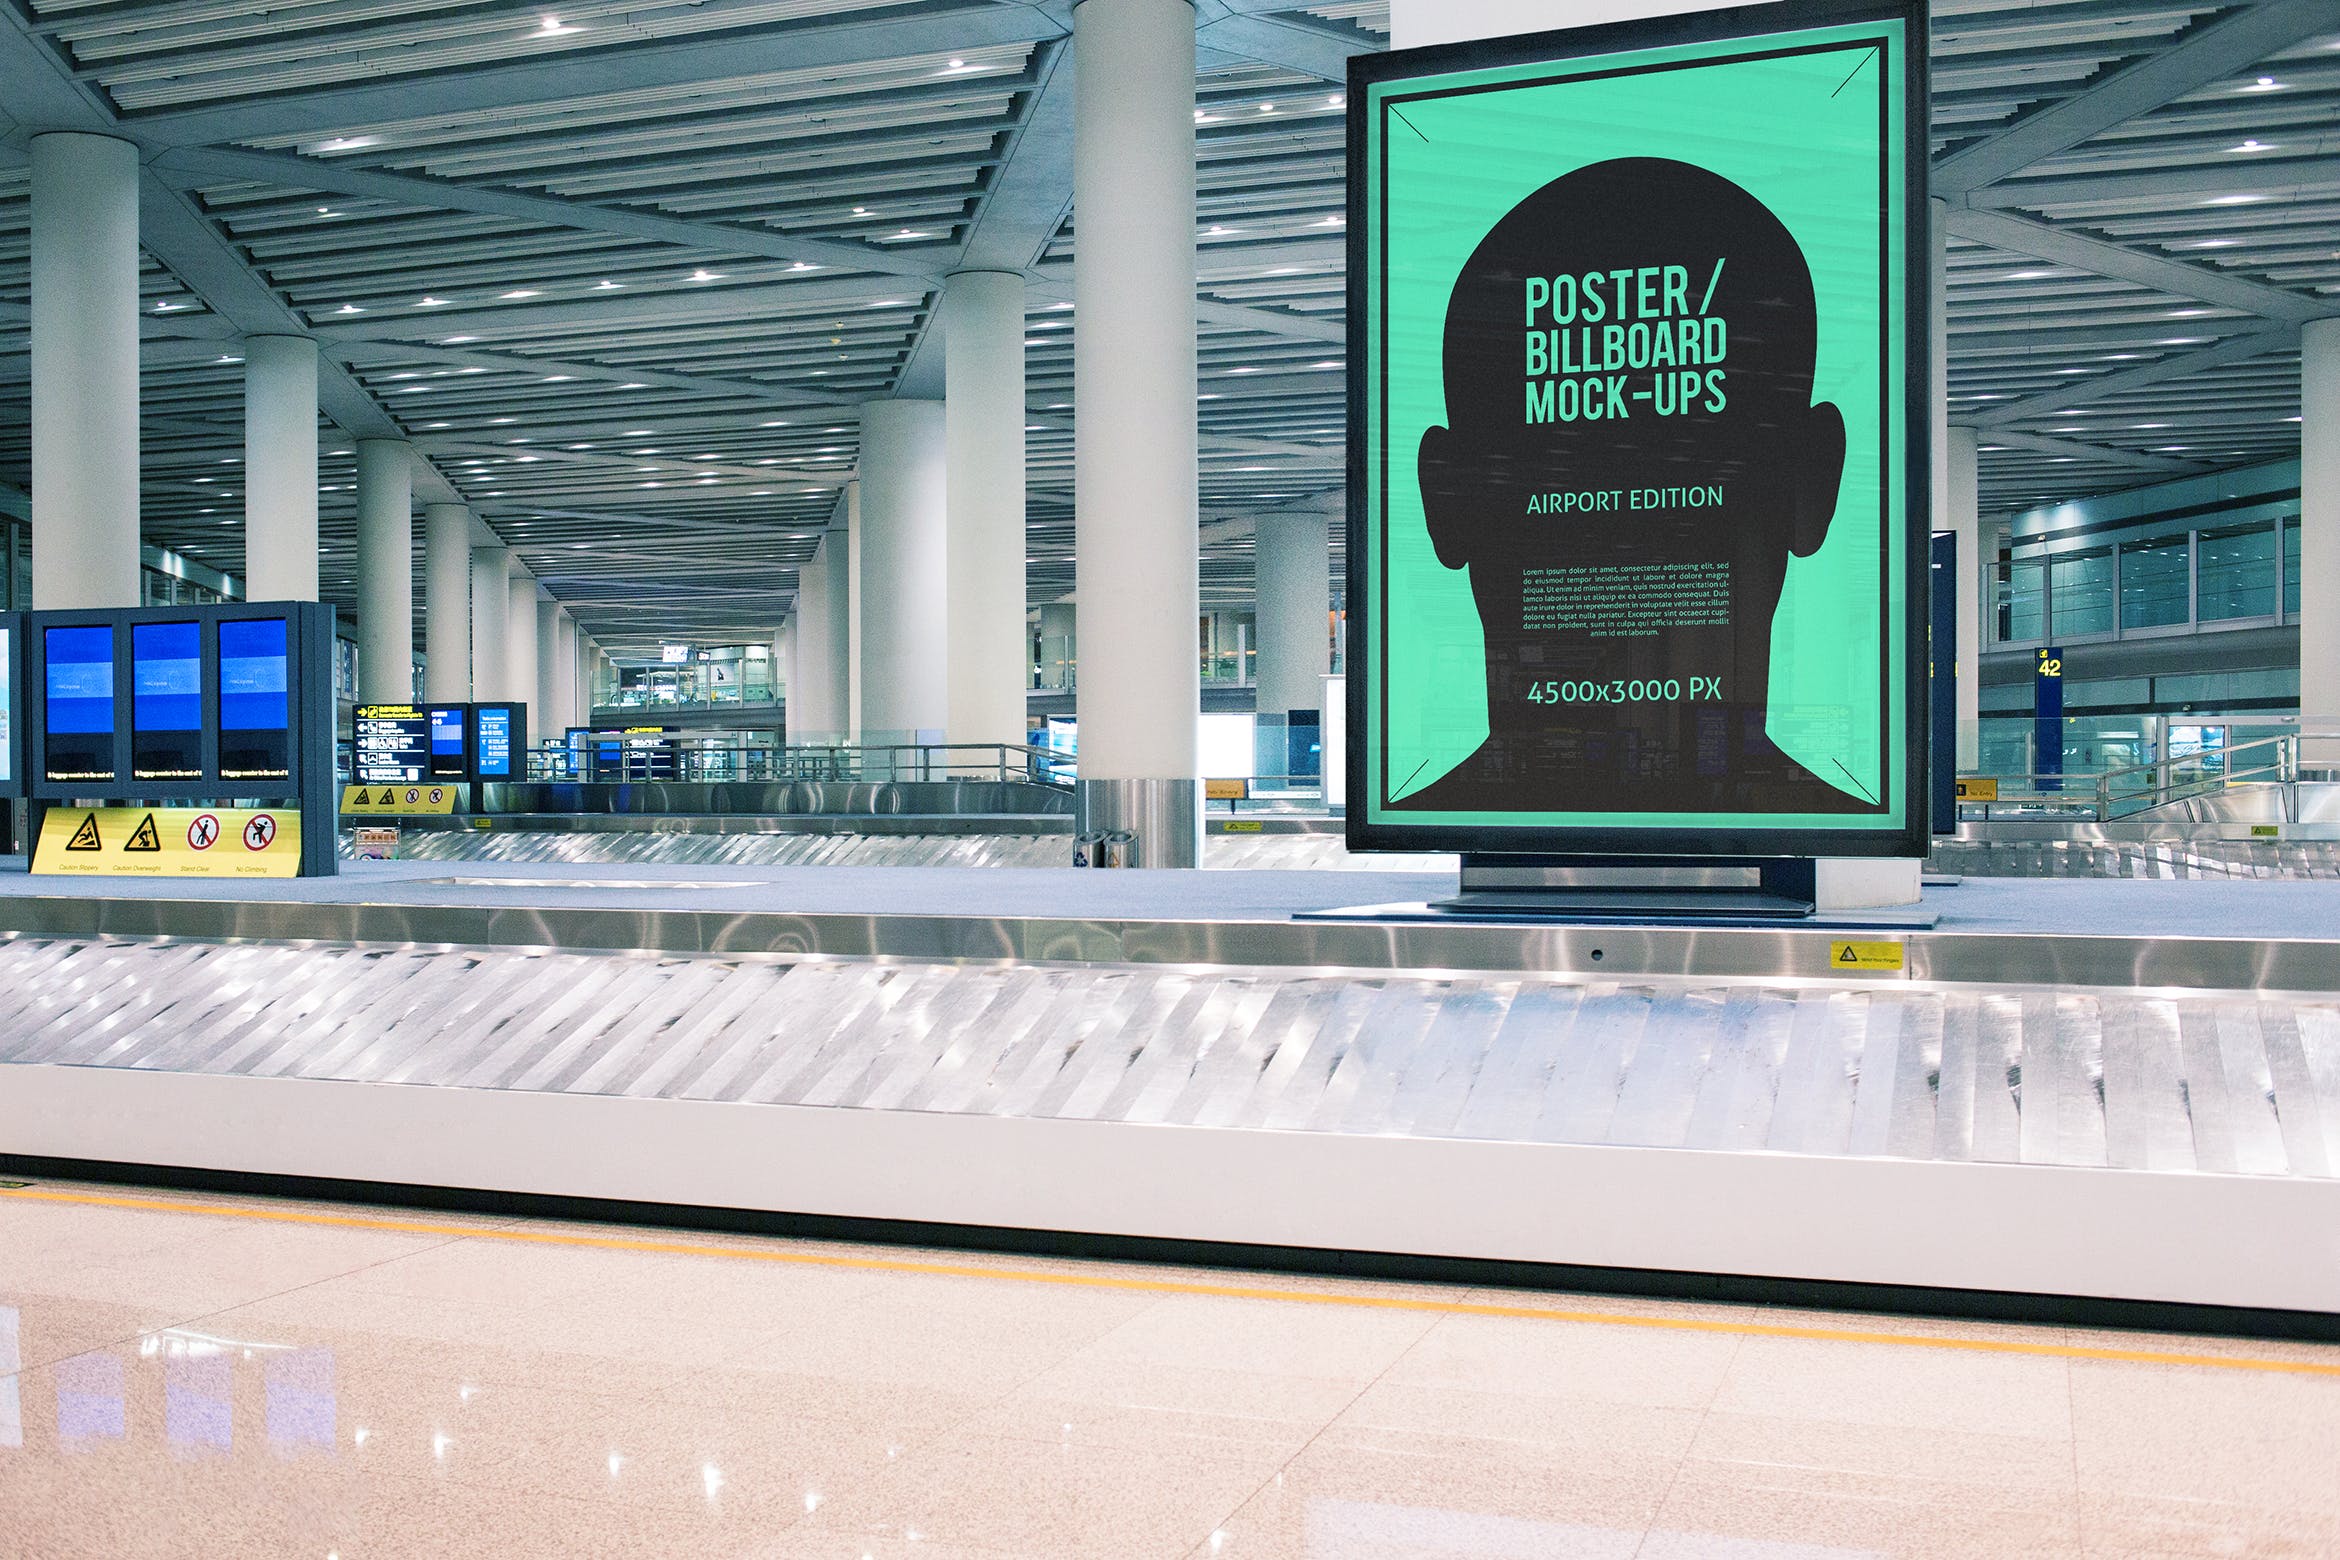 机场候机室海报/广告牌样机素材库精选模板#8 Poster / Billboard Mock-ups – Airport Edition #8插图